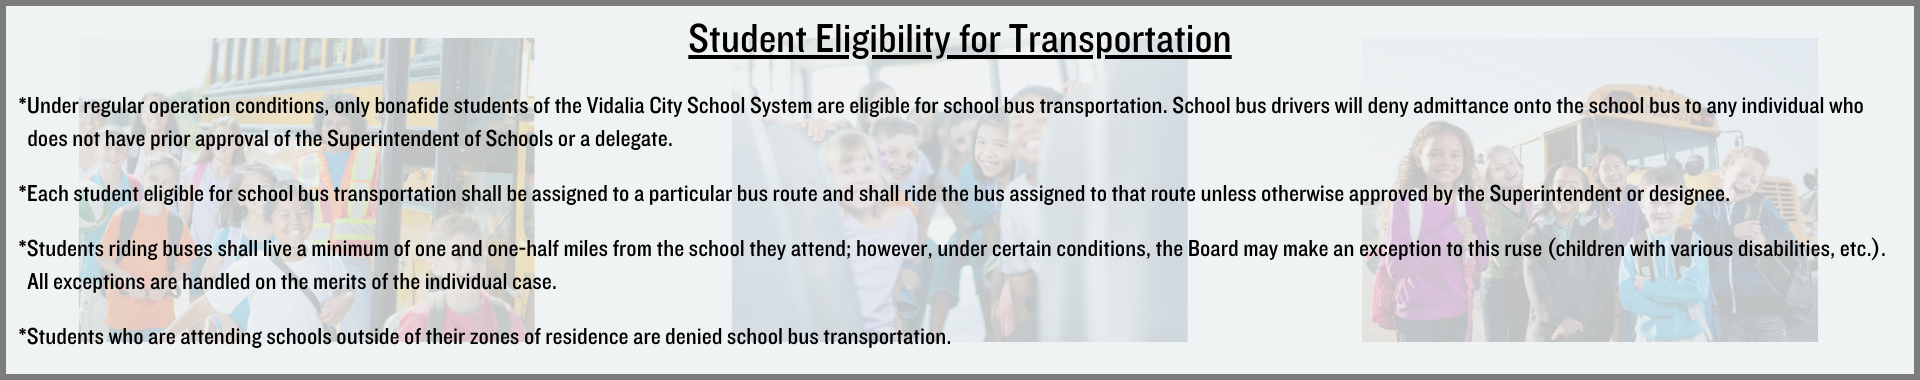 Student Eligibility for Transportation